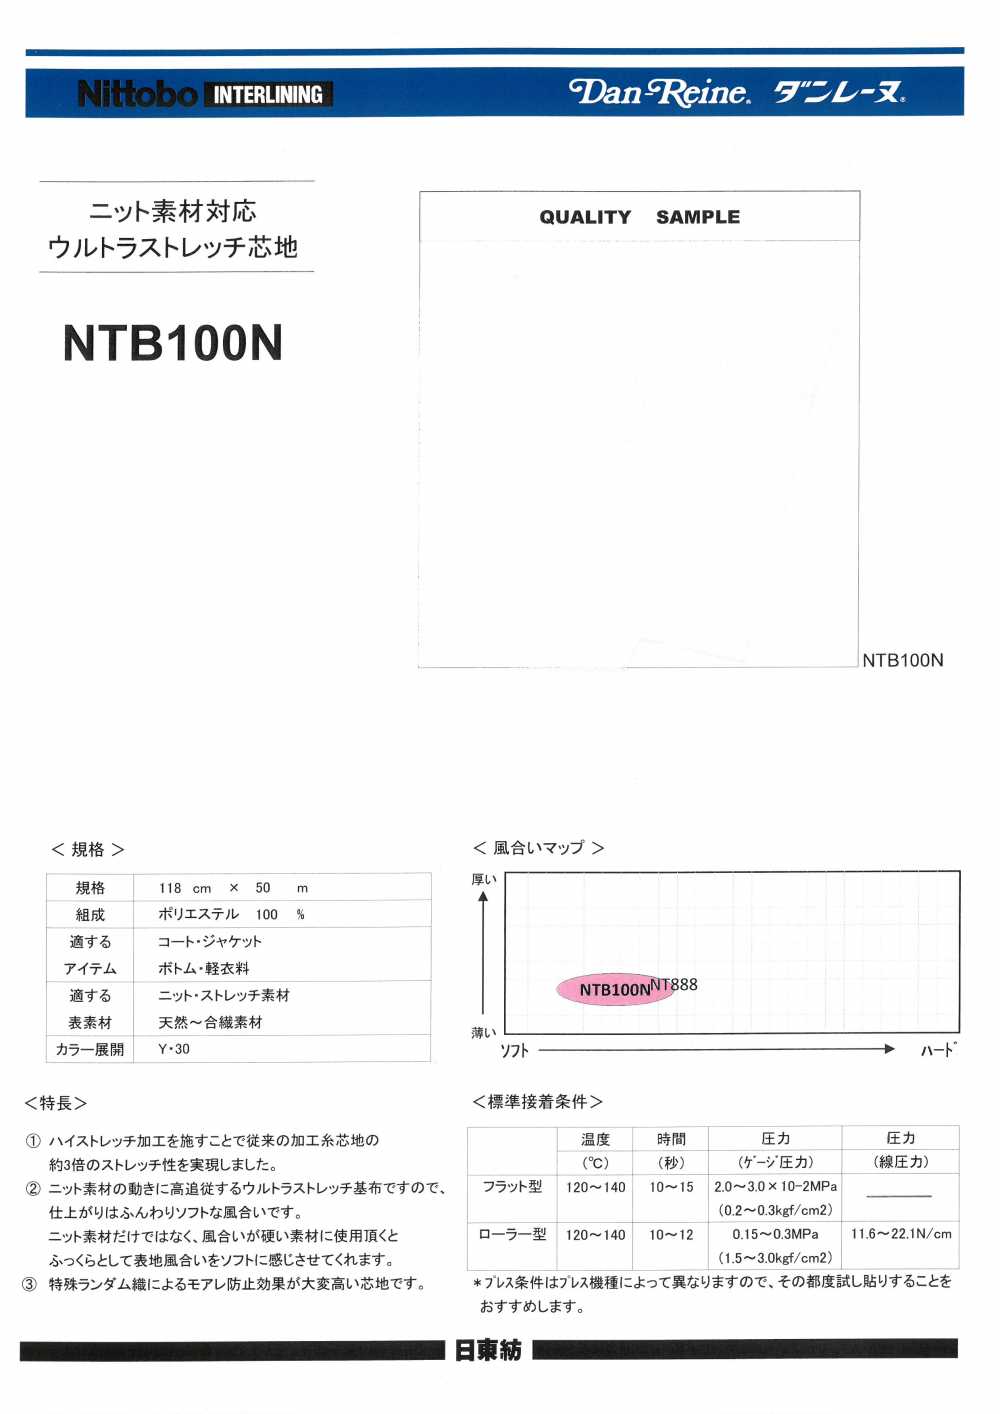 NTB100N 니트 소재 대응 울트라 스트레치 심지 15 D 닛토보 (닛토보인터라이닝)